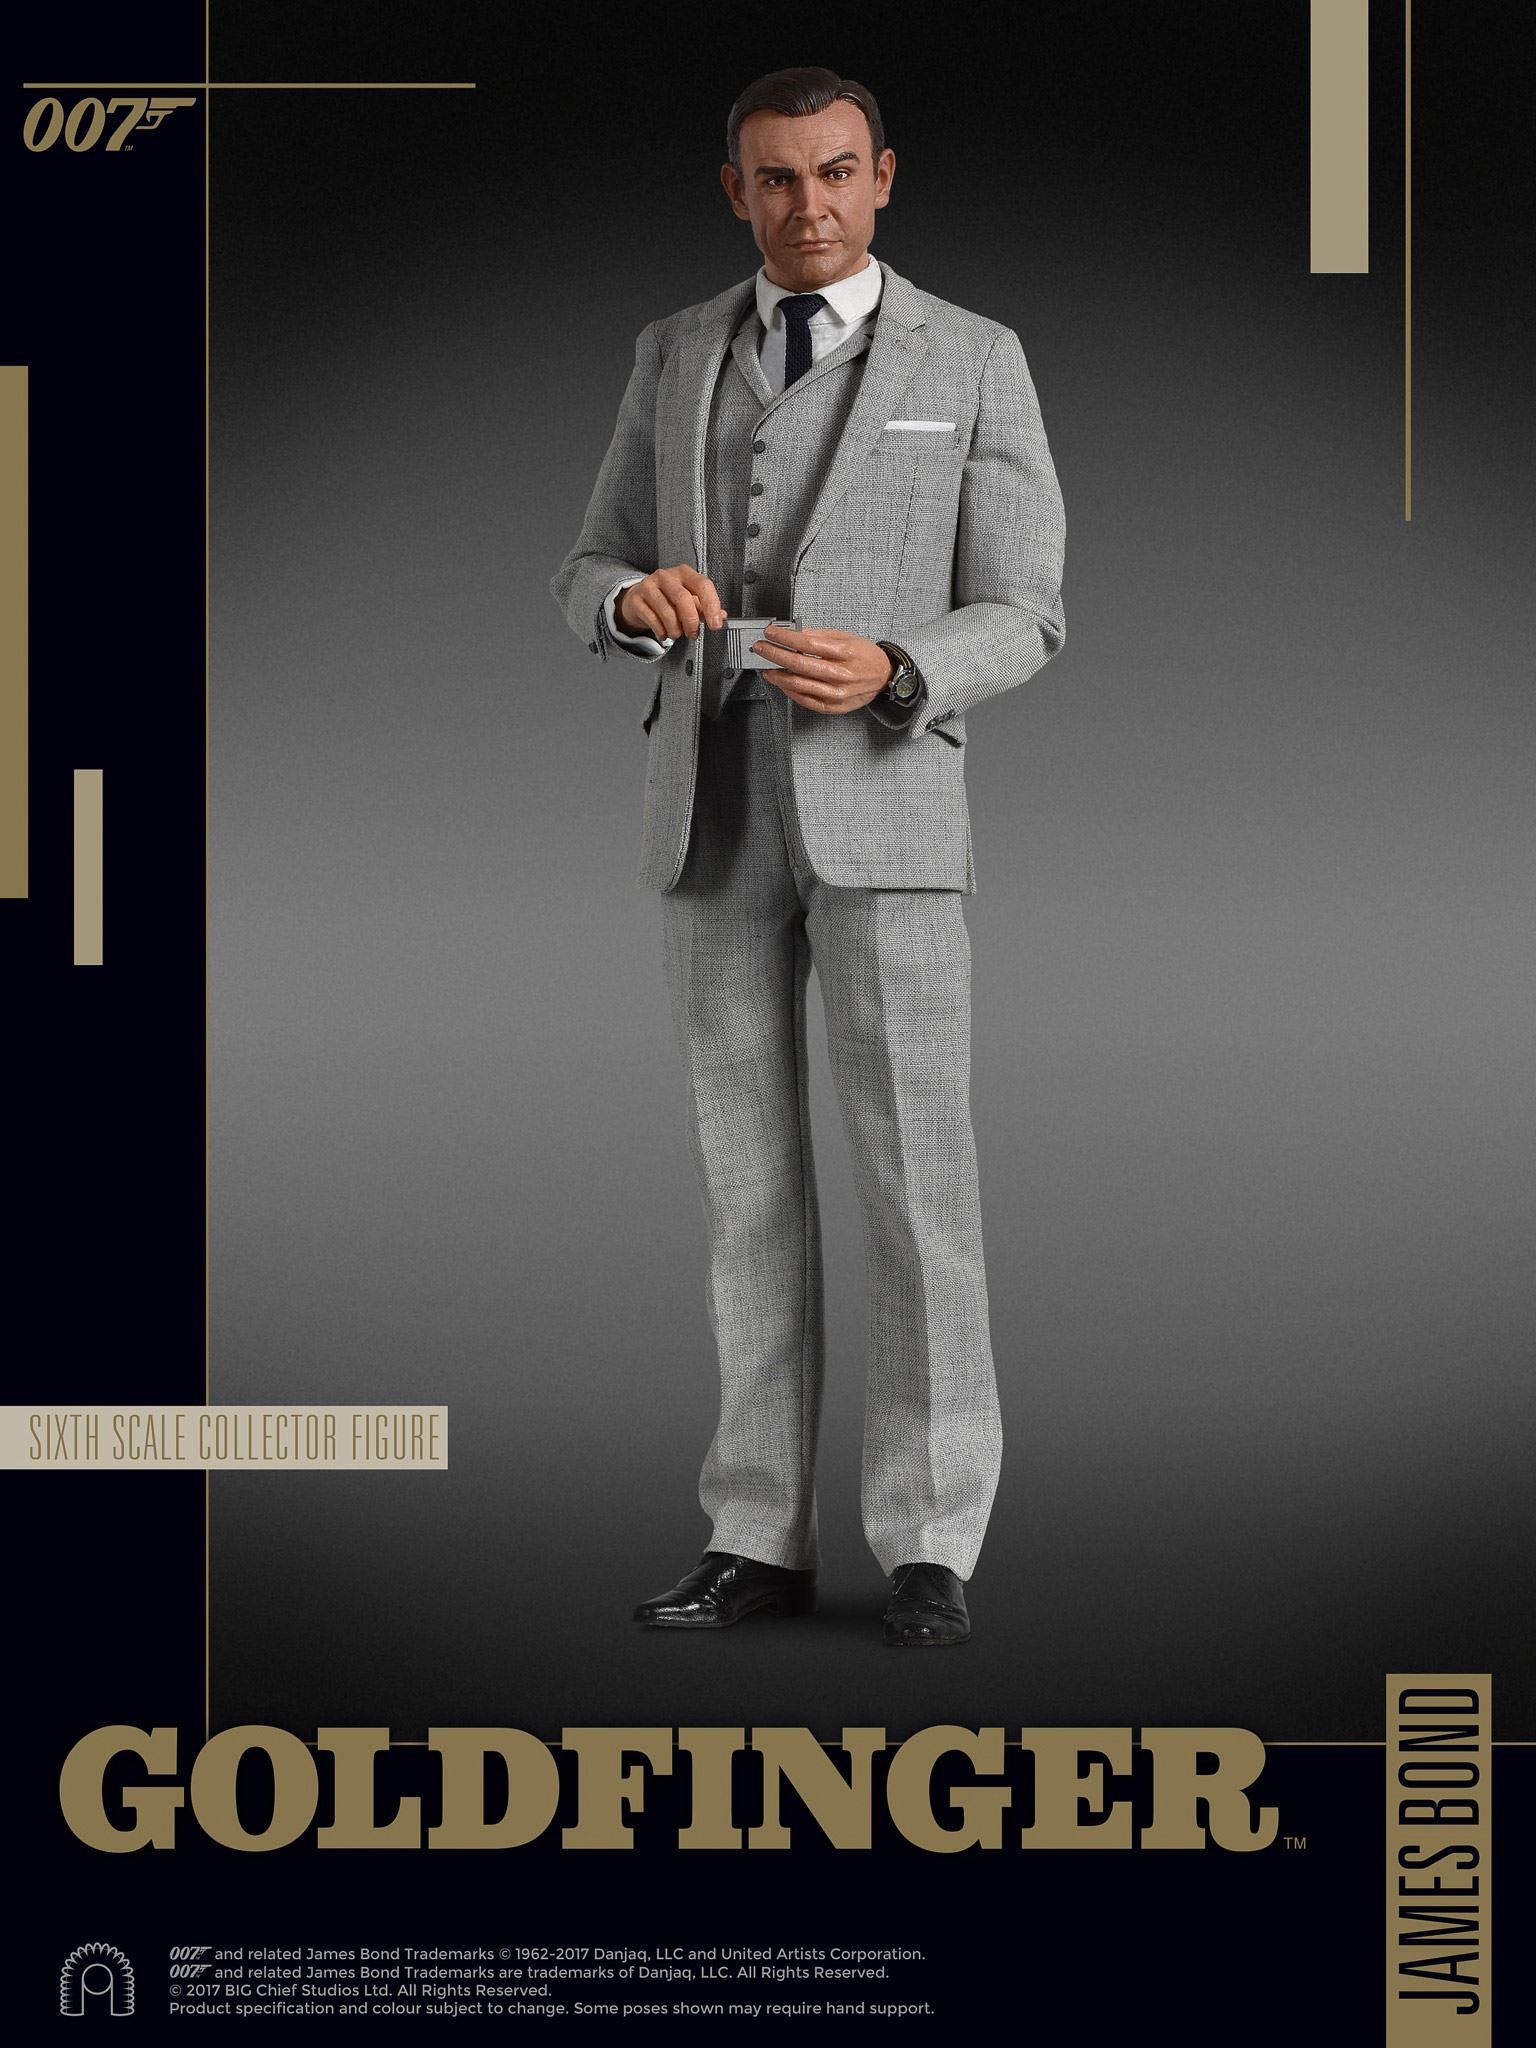 Big-Chief-James-Bond-Goldfinger-Oddjob-Full-Reveal-004.jpg